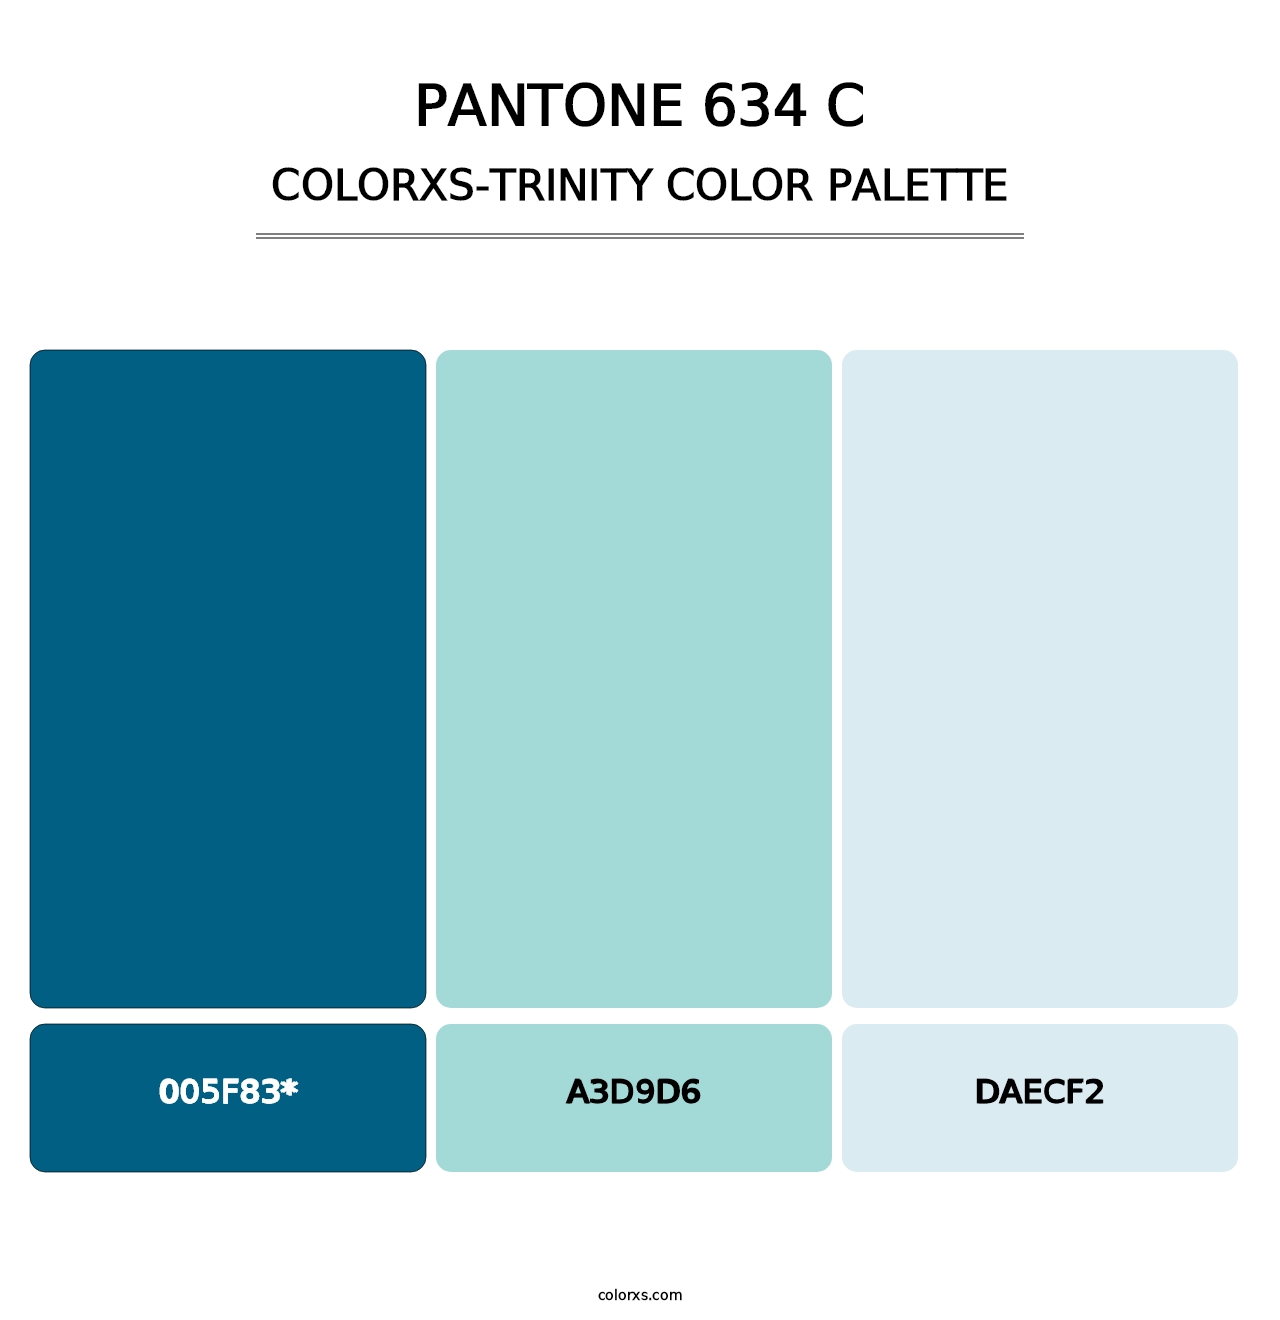 PANTONE 634 C - Colorxs Trinity Palette